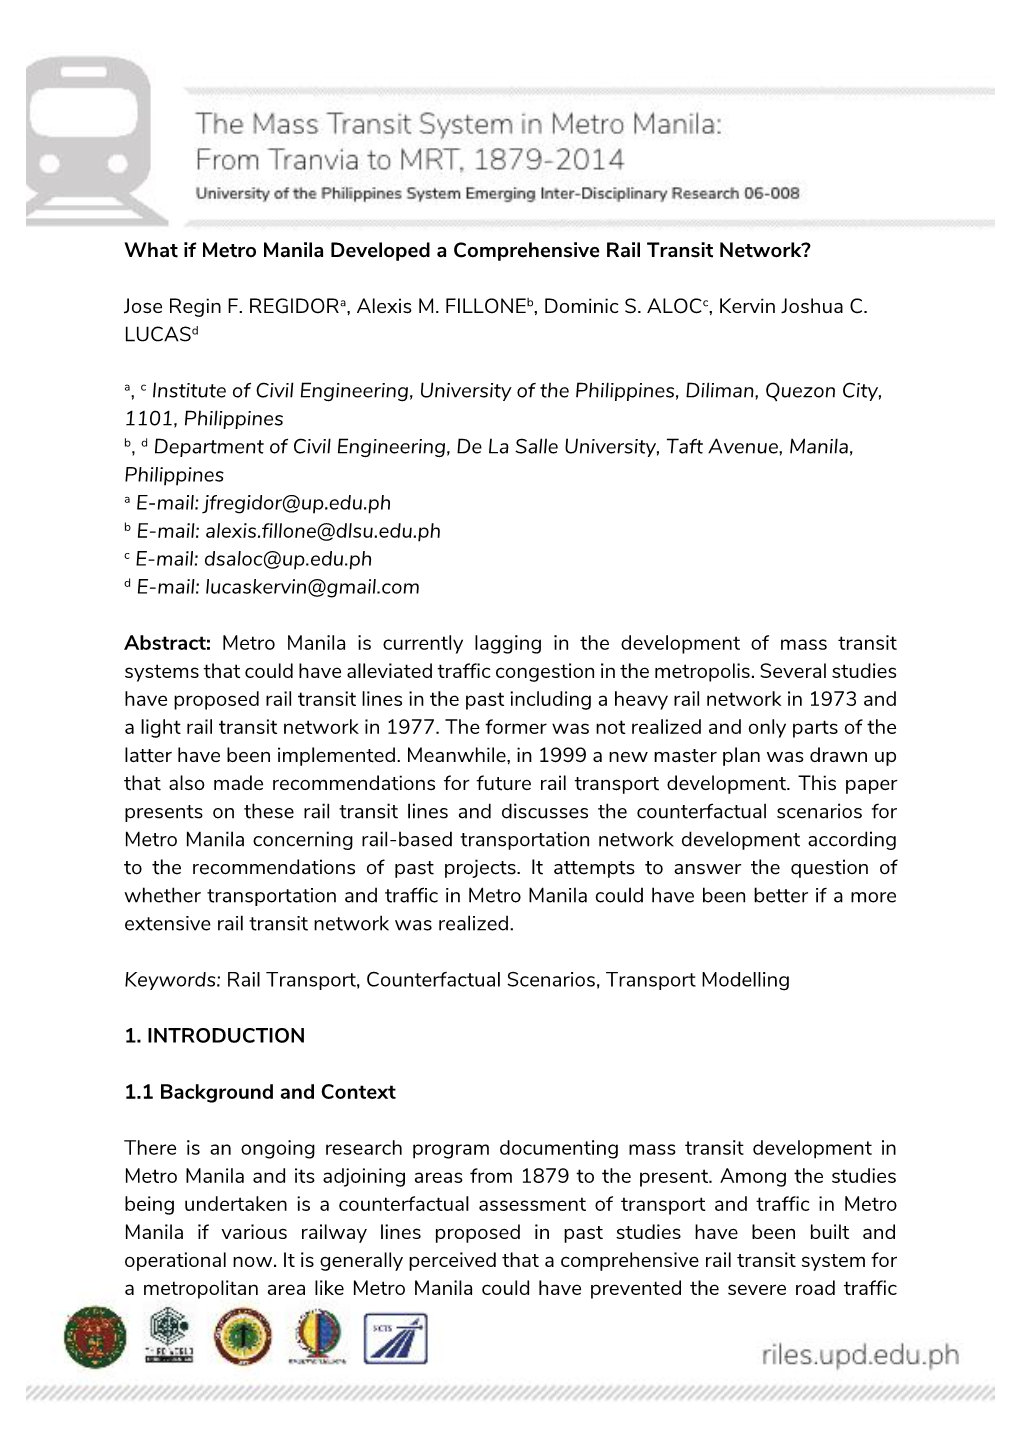 What If Metro Manila Developed a Comprehensive Rail Transit Network? Jose Regin F. Regidora, Alexis M. Filloneb, Dominic S. ALOC